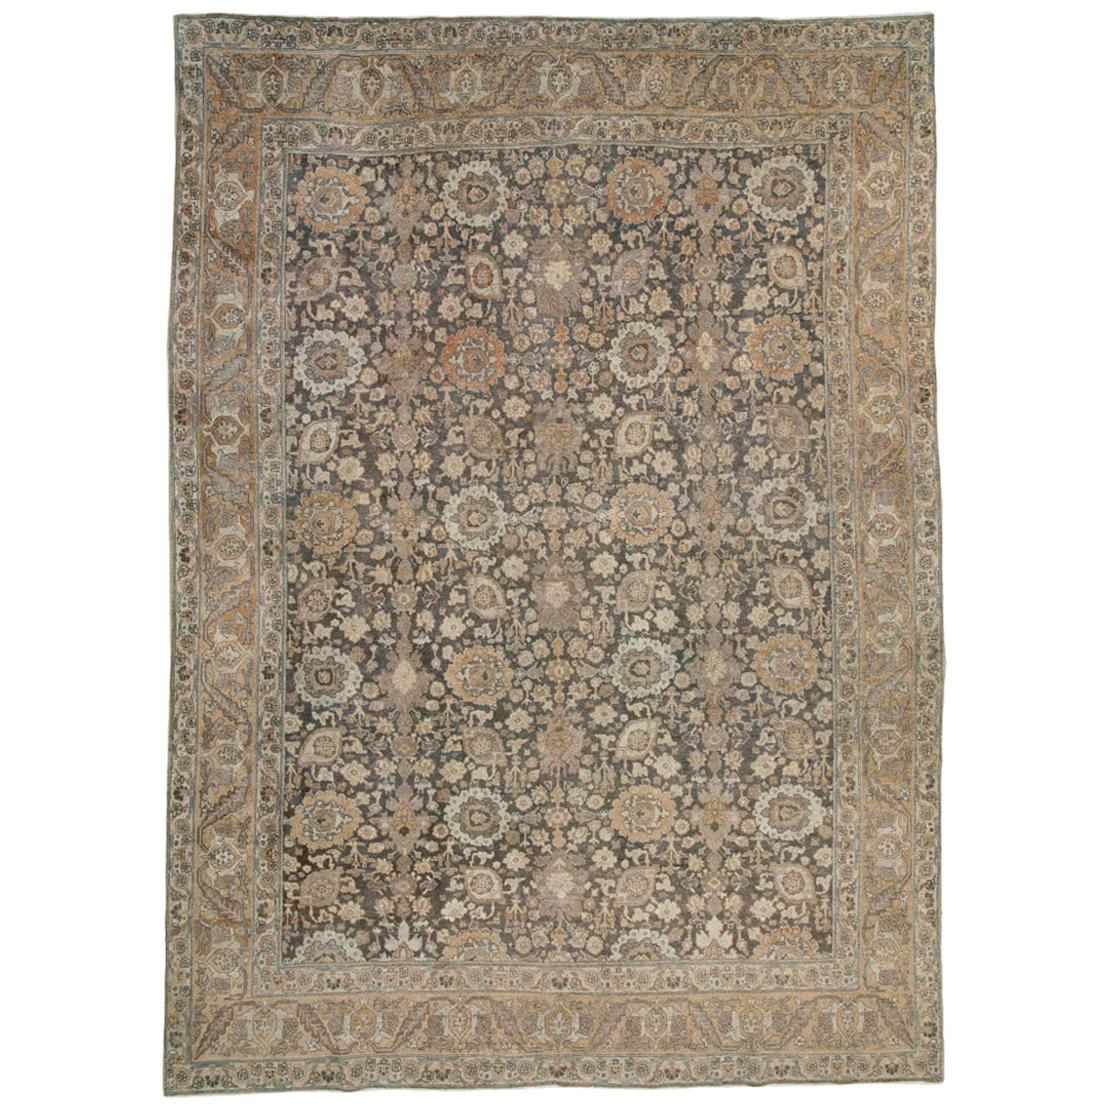 Early 20th Century Handmade Persian Rustic Tabriz Small Room Size Carpet